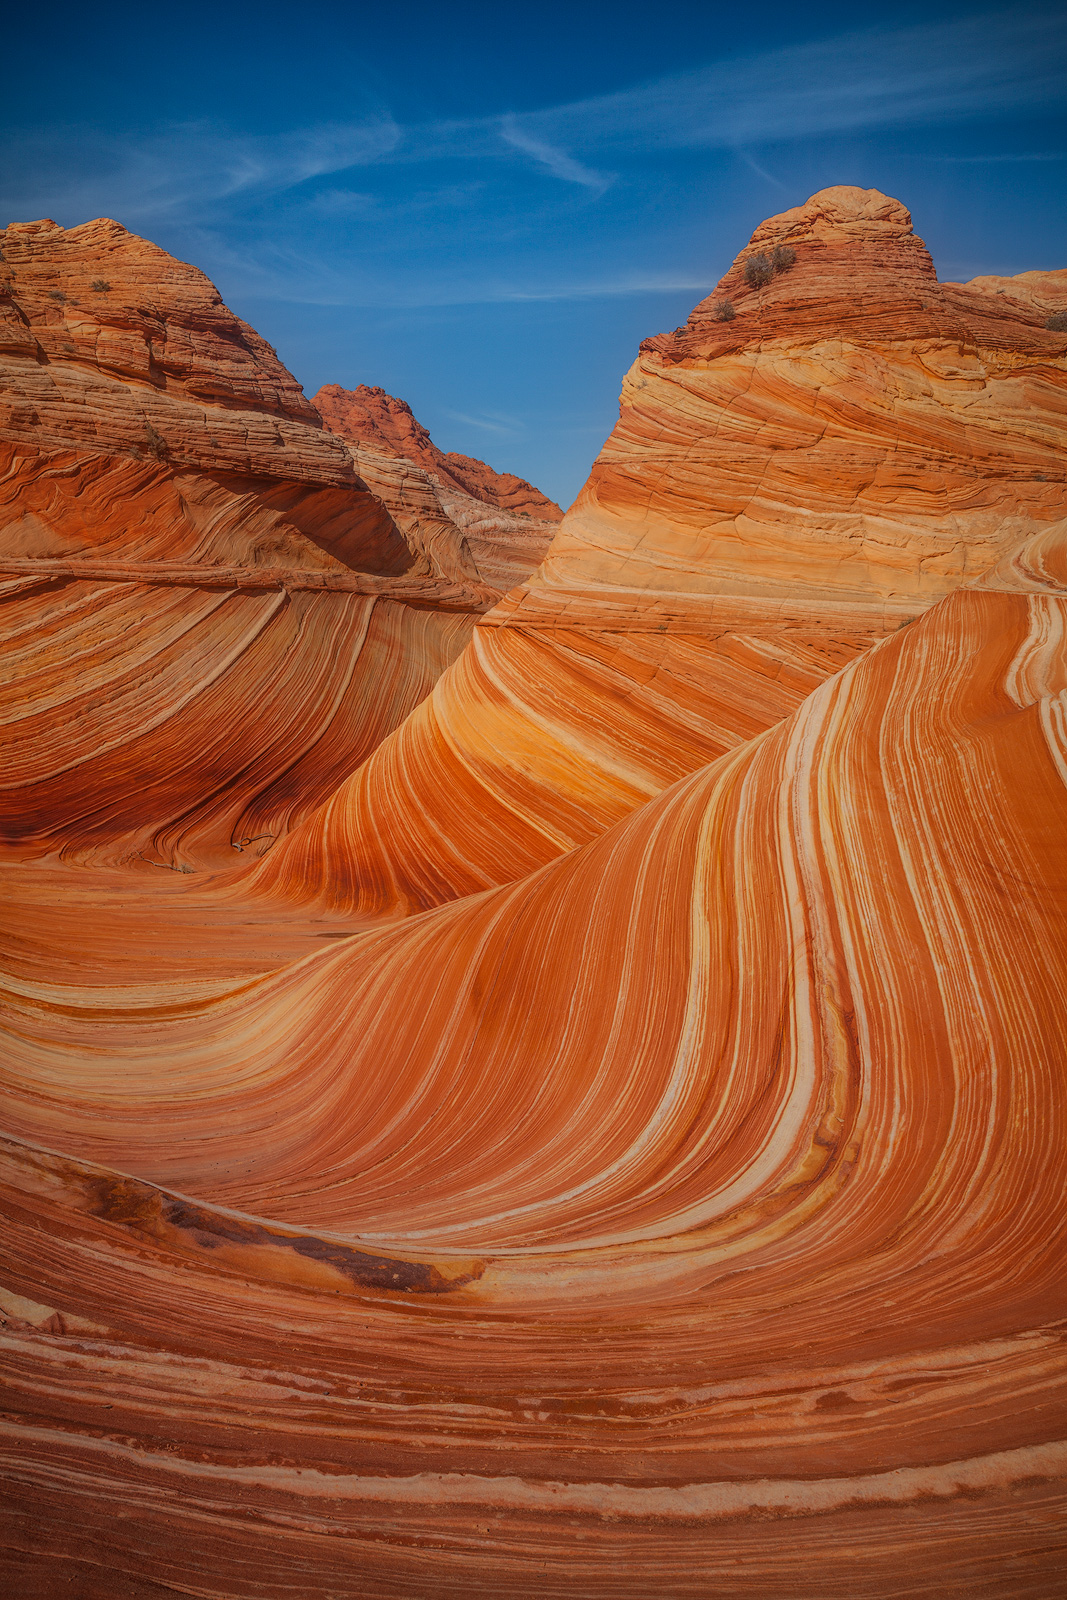 An amazing sandstone formation hidden in the desert.